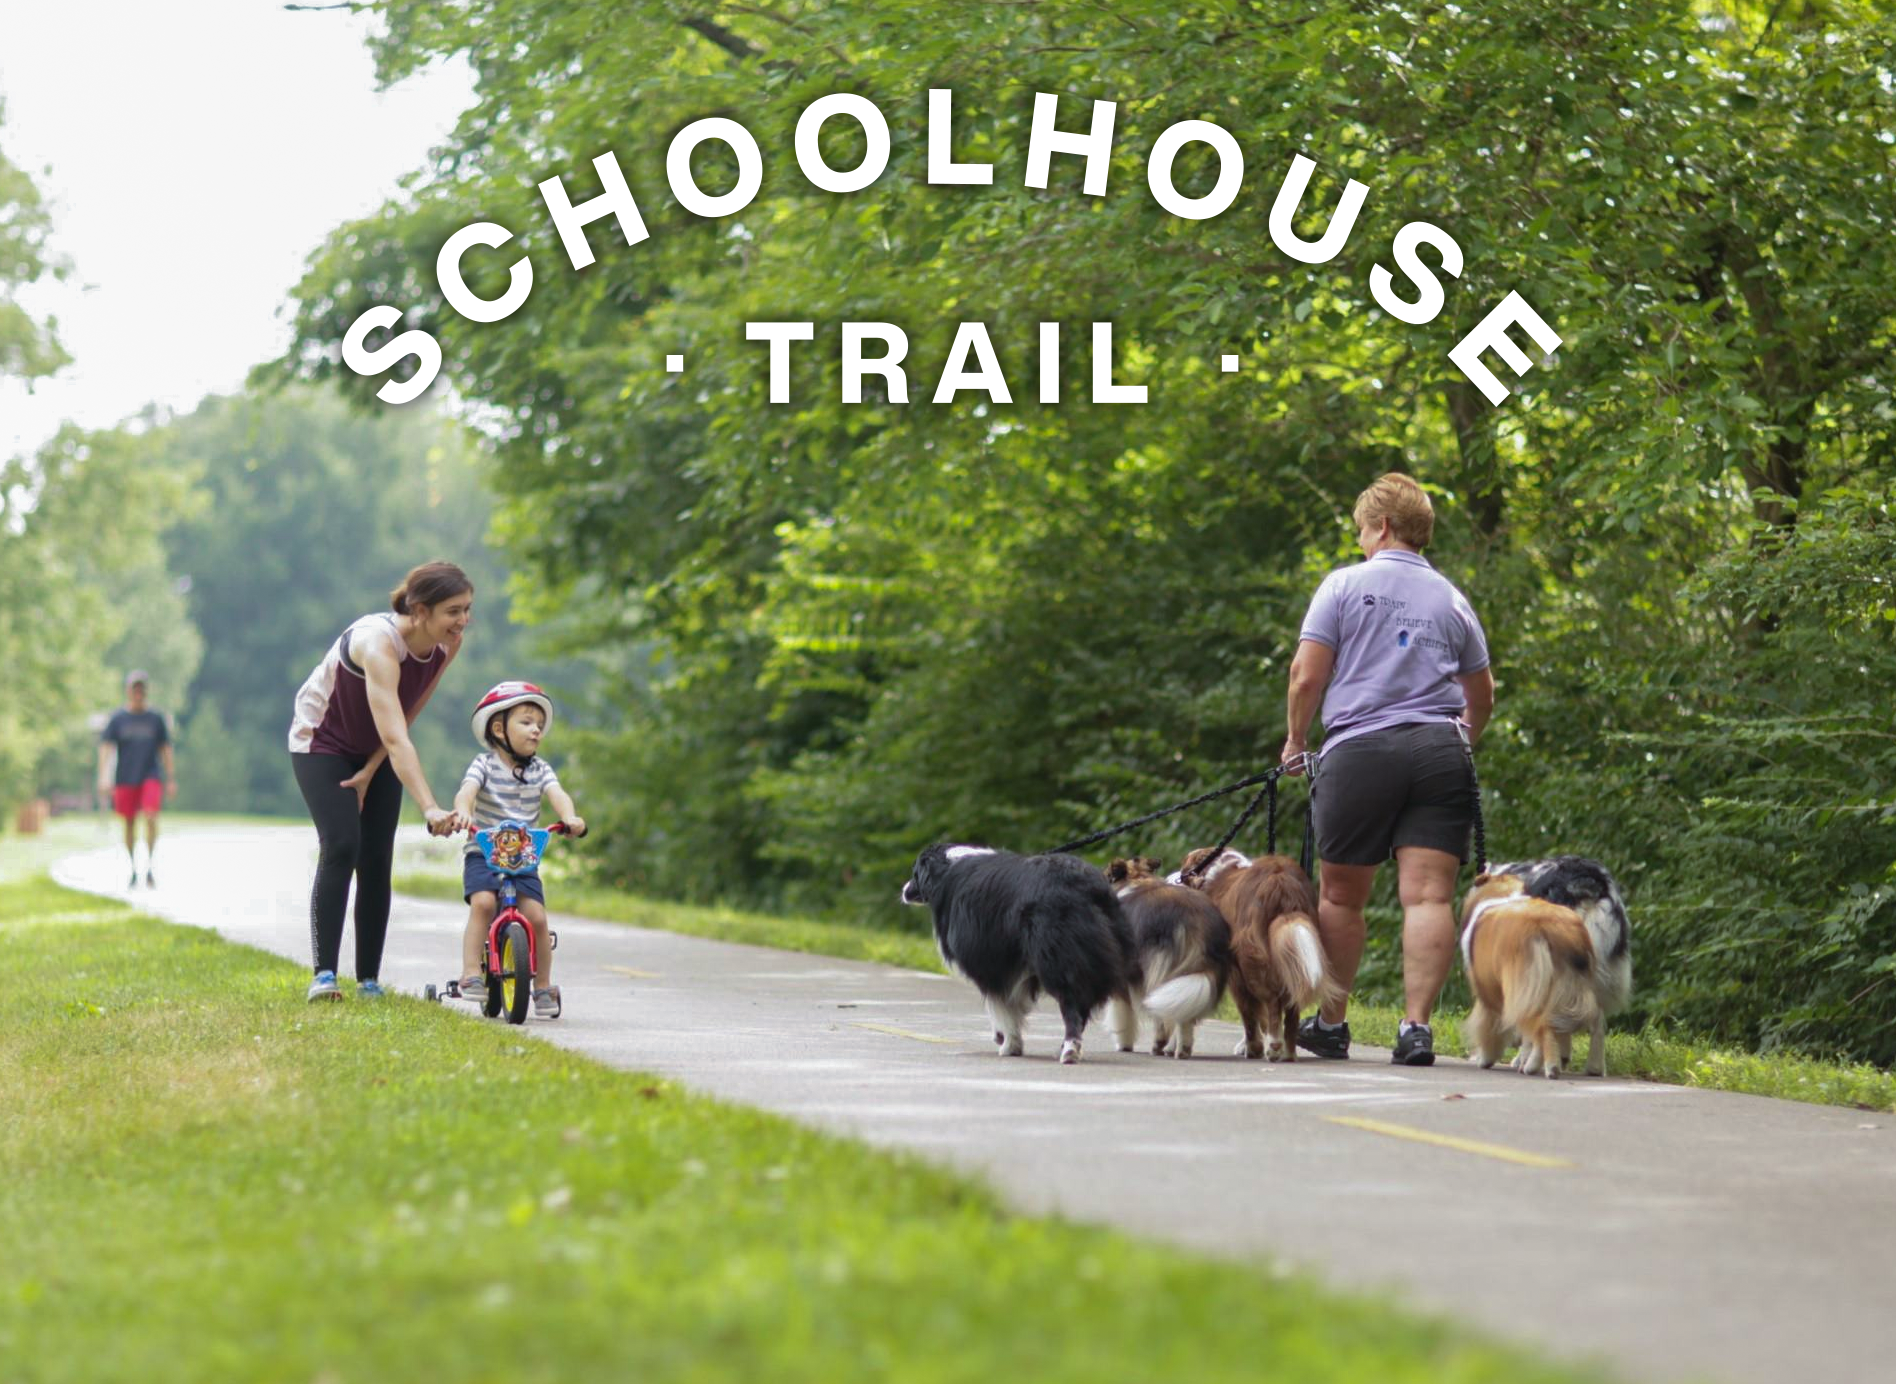 MCT Schoolhouse Trail